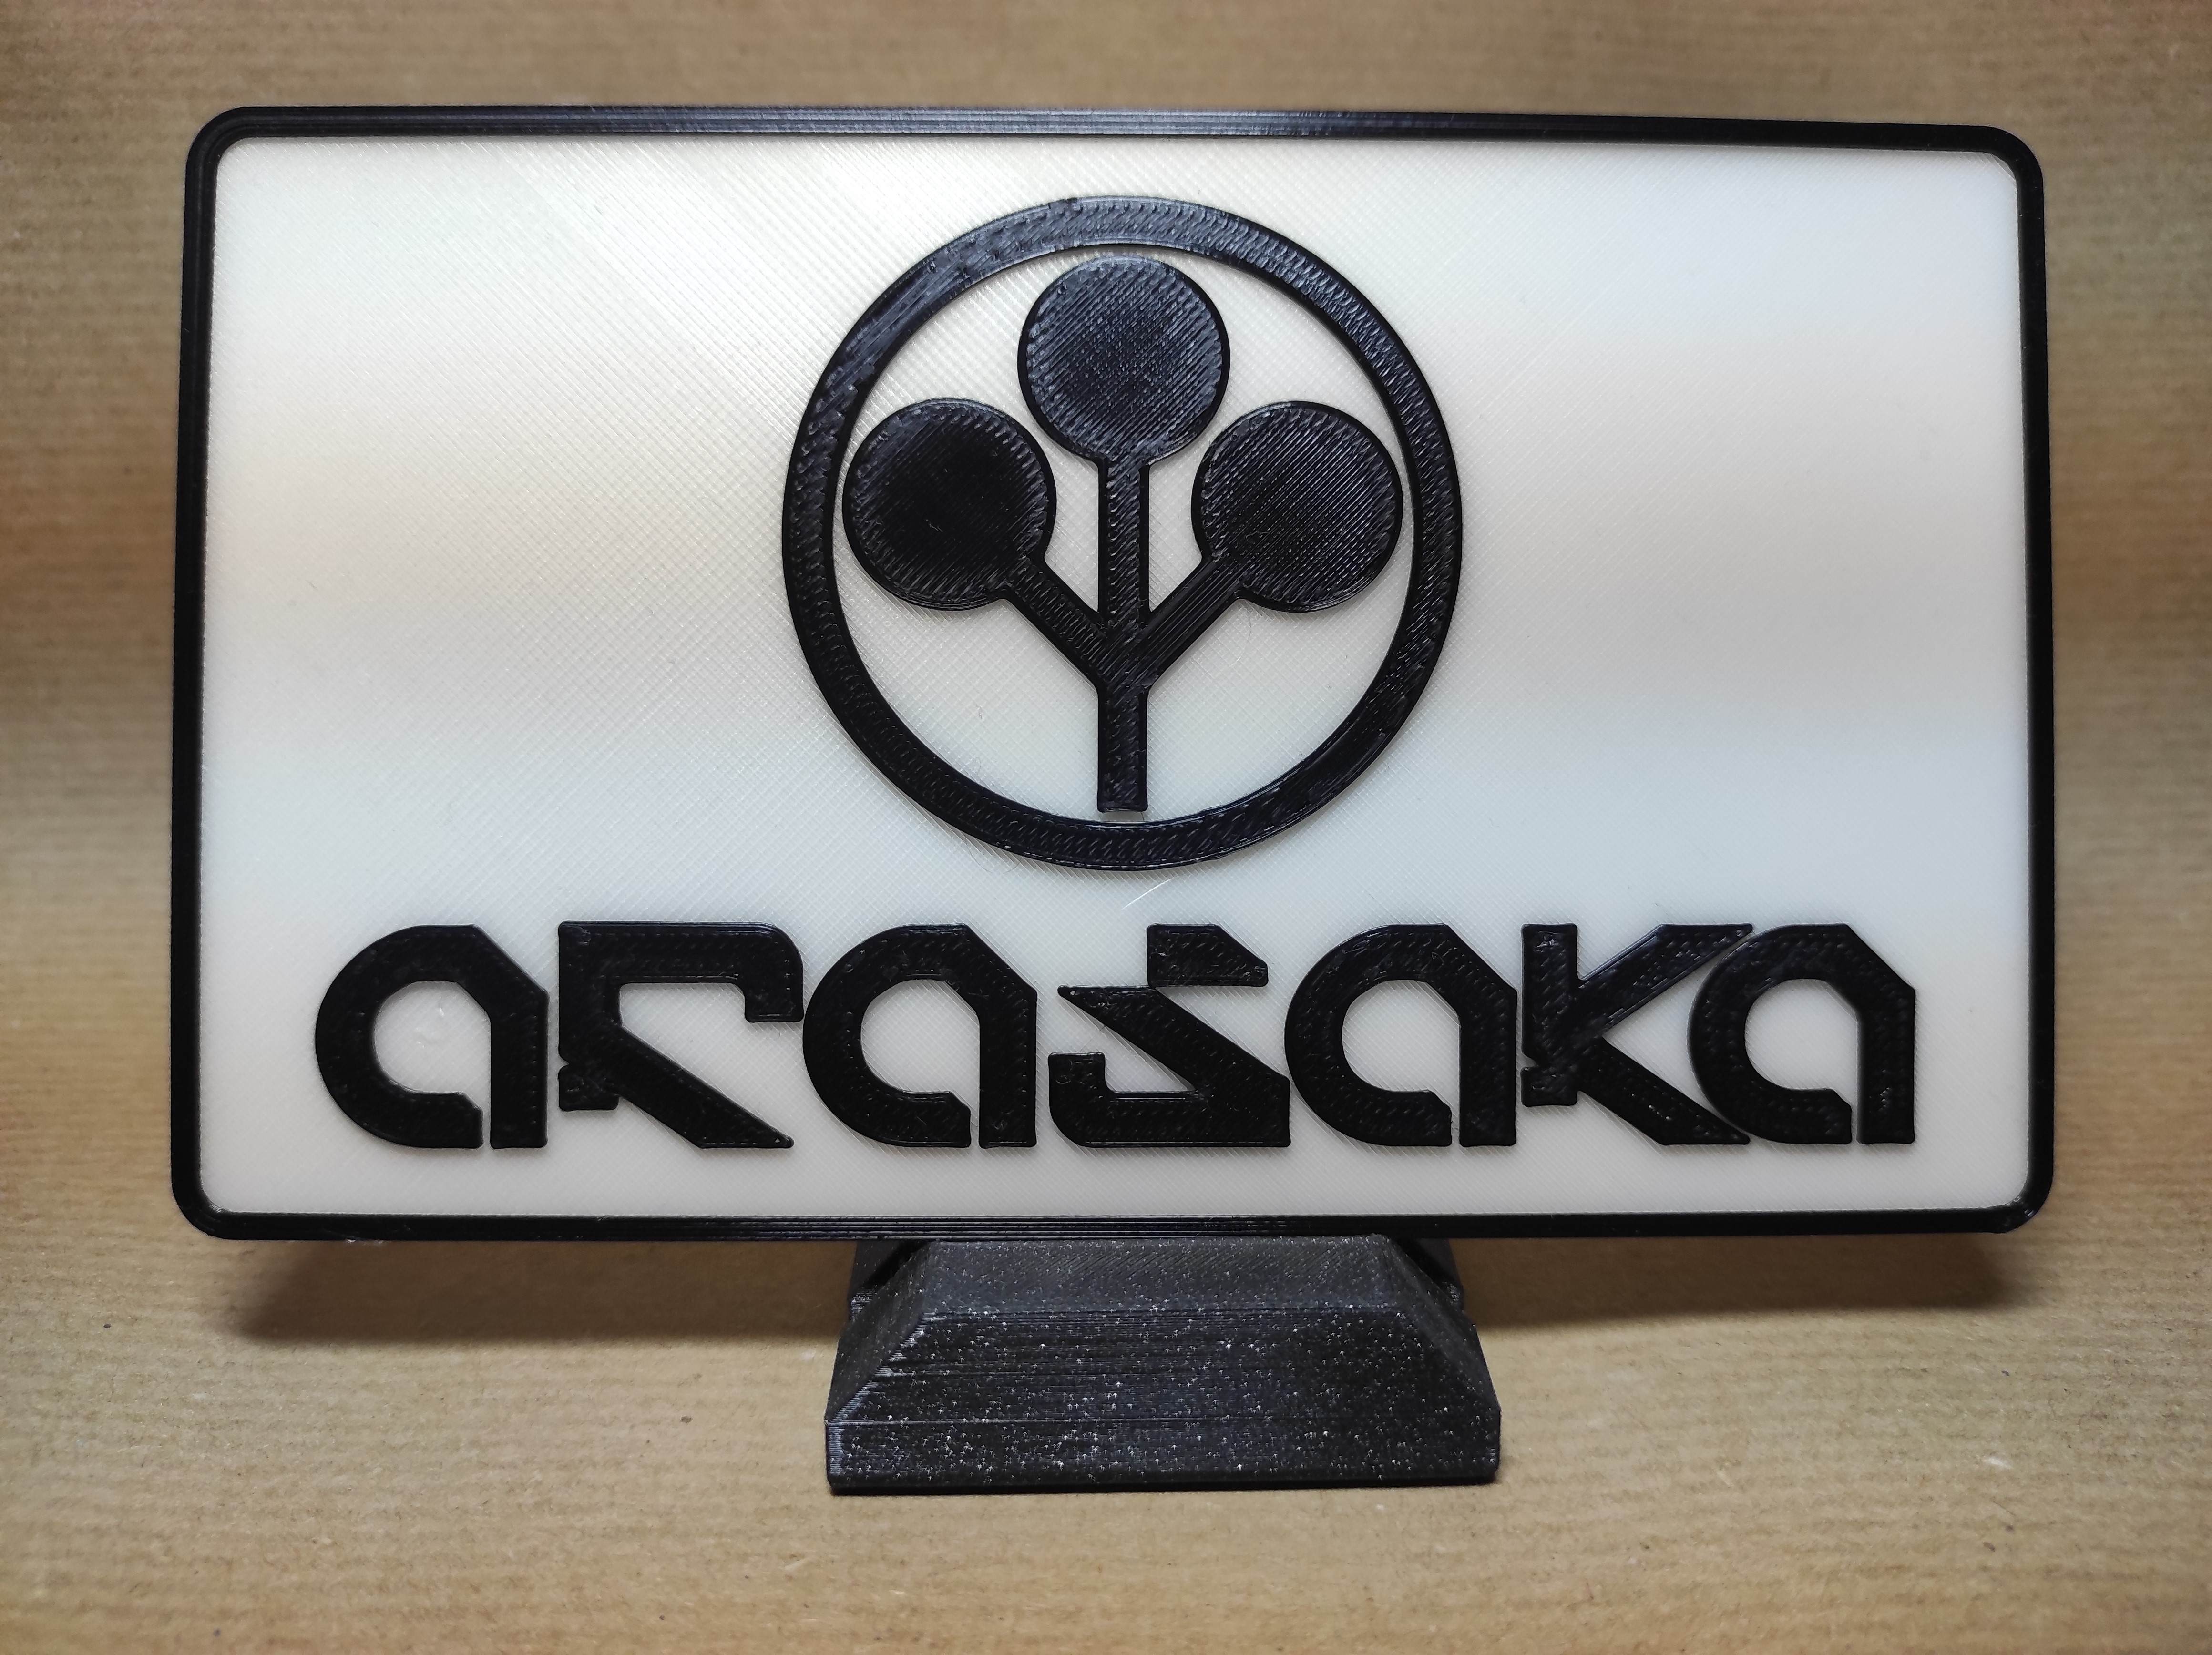 Arasaka sign from Cyberpunk 2077